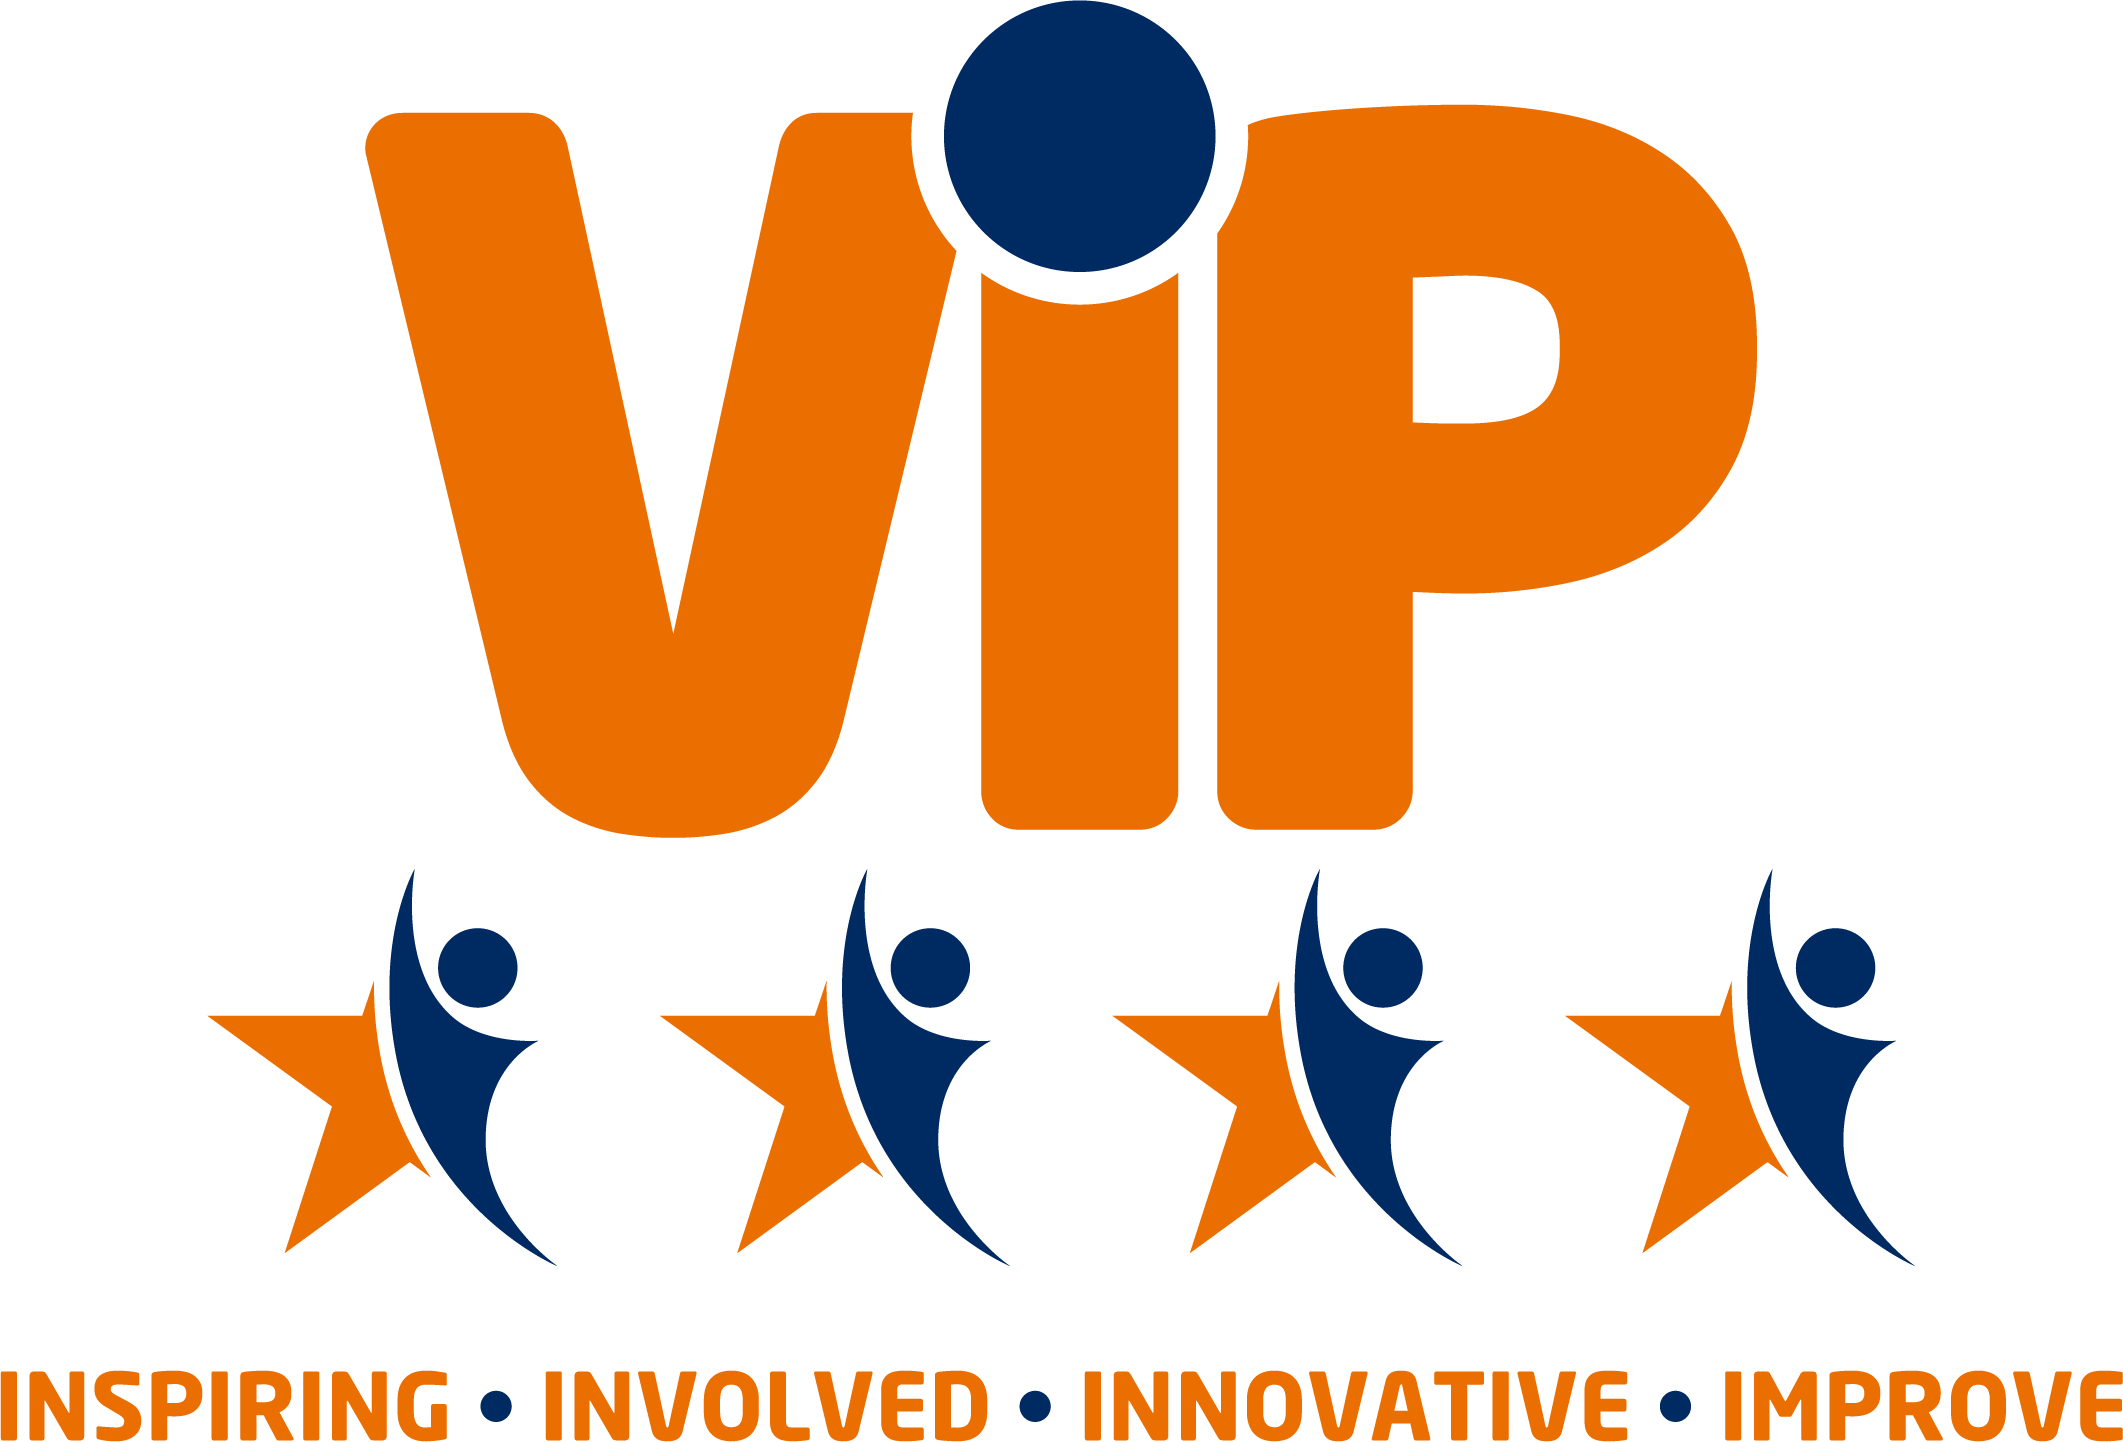 ViP recognition scheme